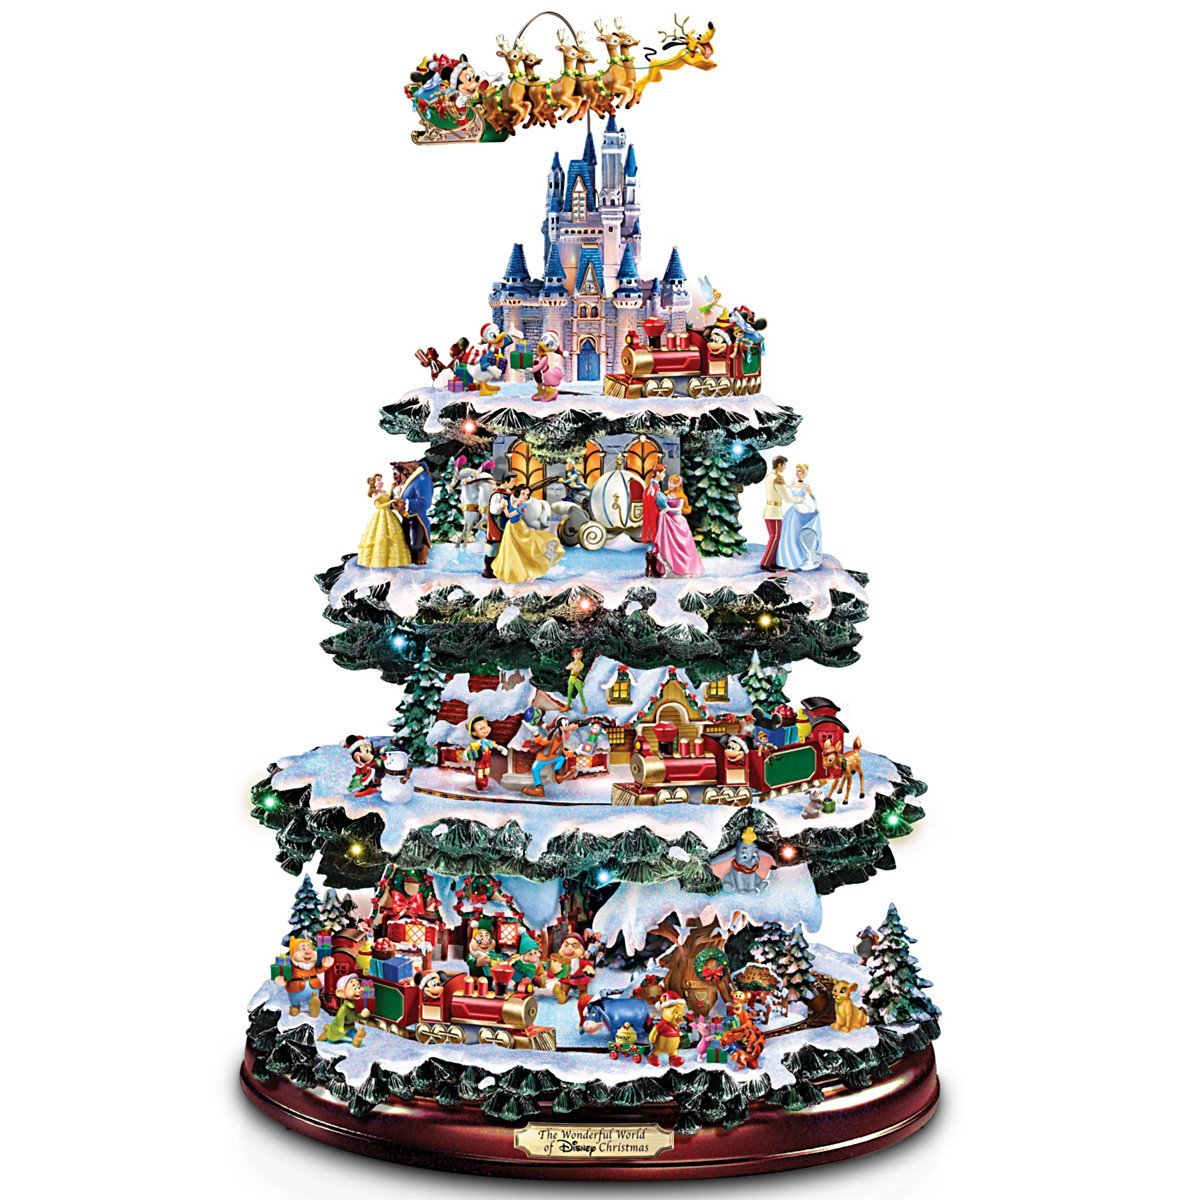 The Bradford Exchange's Ultimate Disney Christmas Decoration